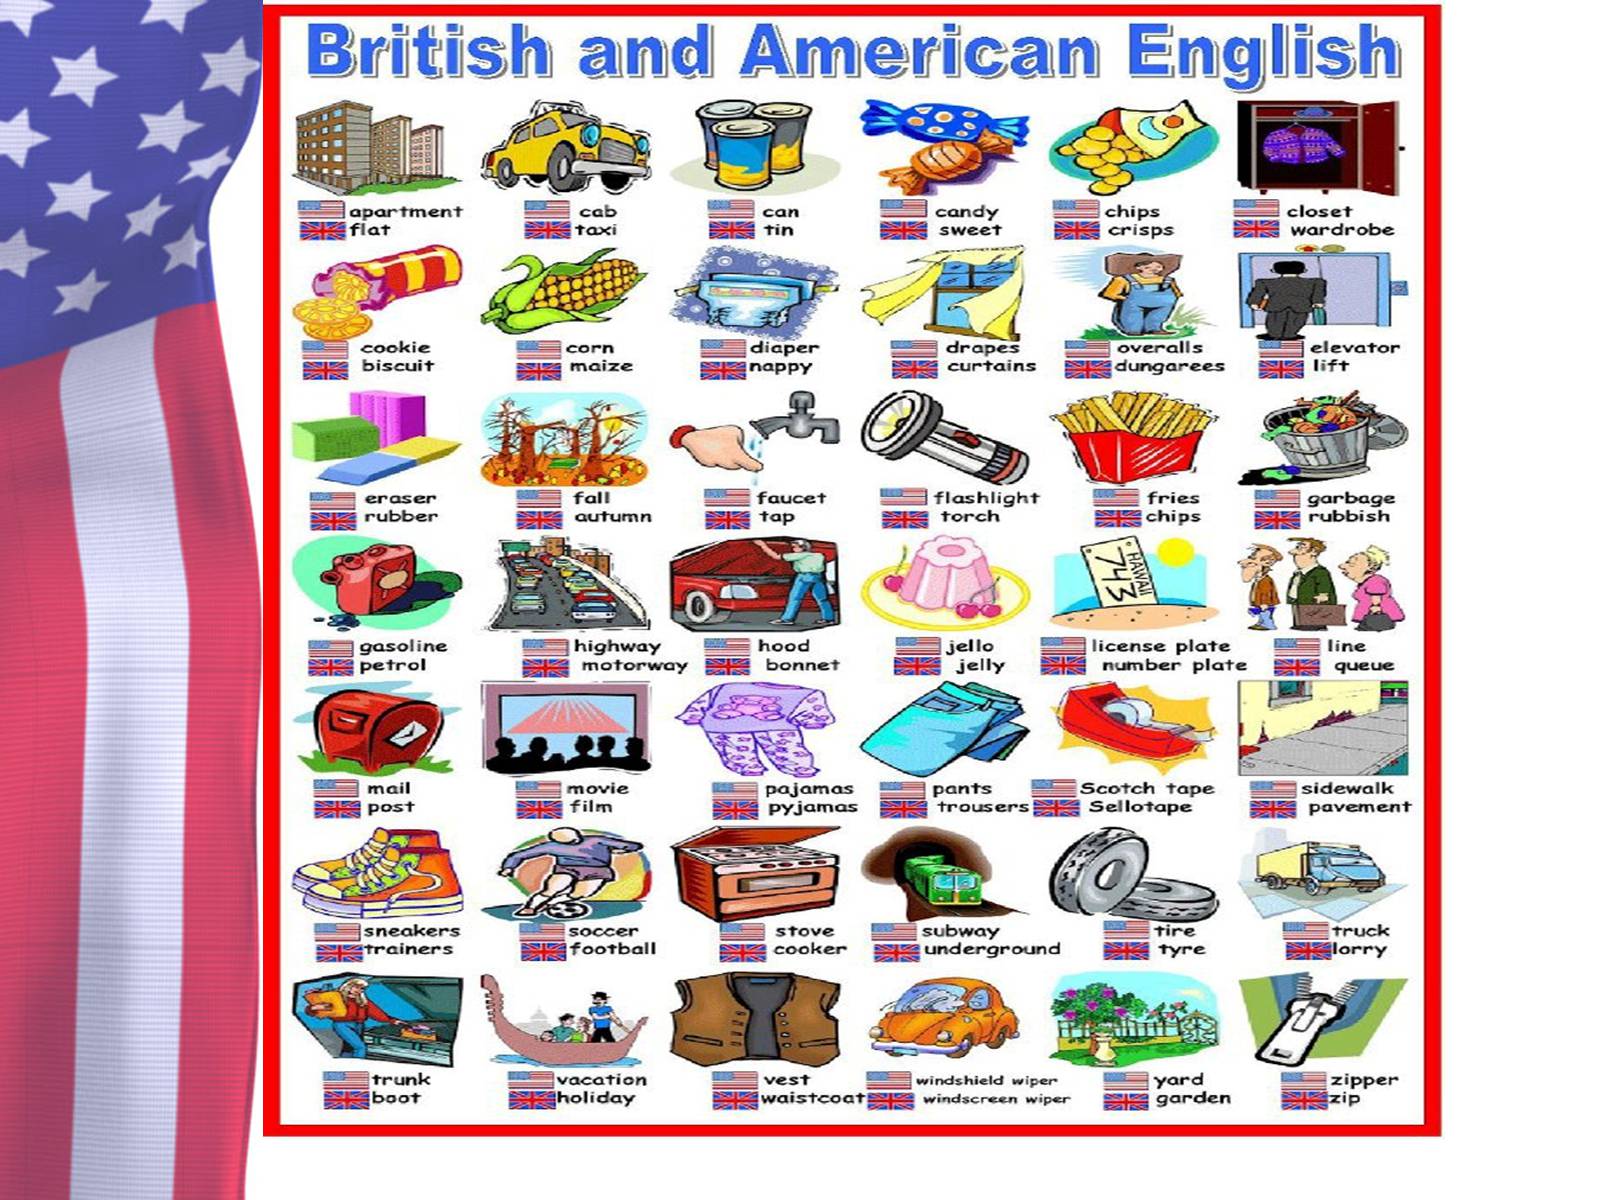 Американский британский английский слова. Лексика в американском и британском. Лексика британского и американского английского языка. Различия американского и британского английского языка. Британский и американский английский слова.